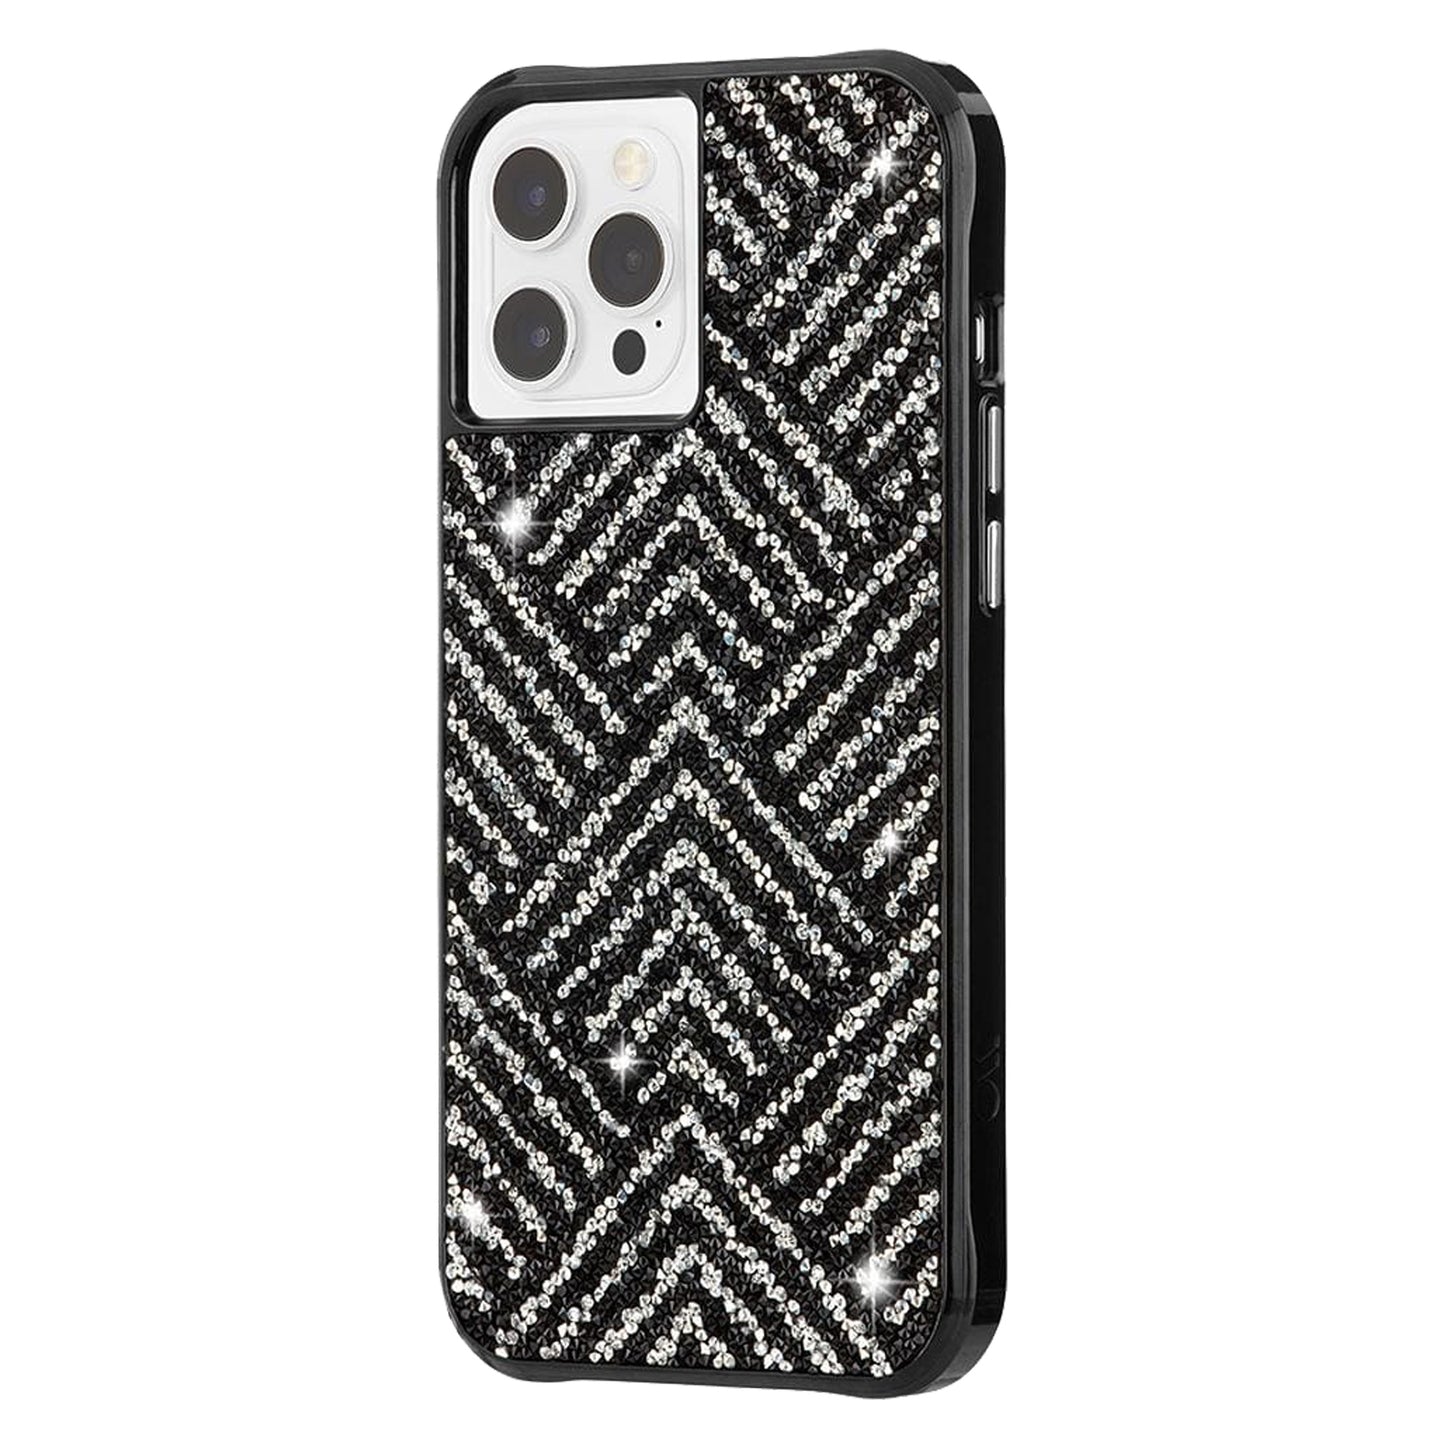 Case Mate Brilliance for iPhone 12 Mini 5.4 5G - Herringbone - Black with Micropel (Barcode: 846127196581 )